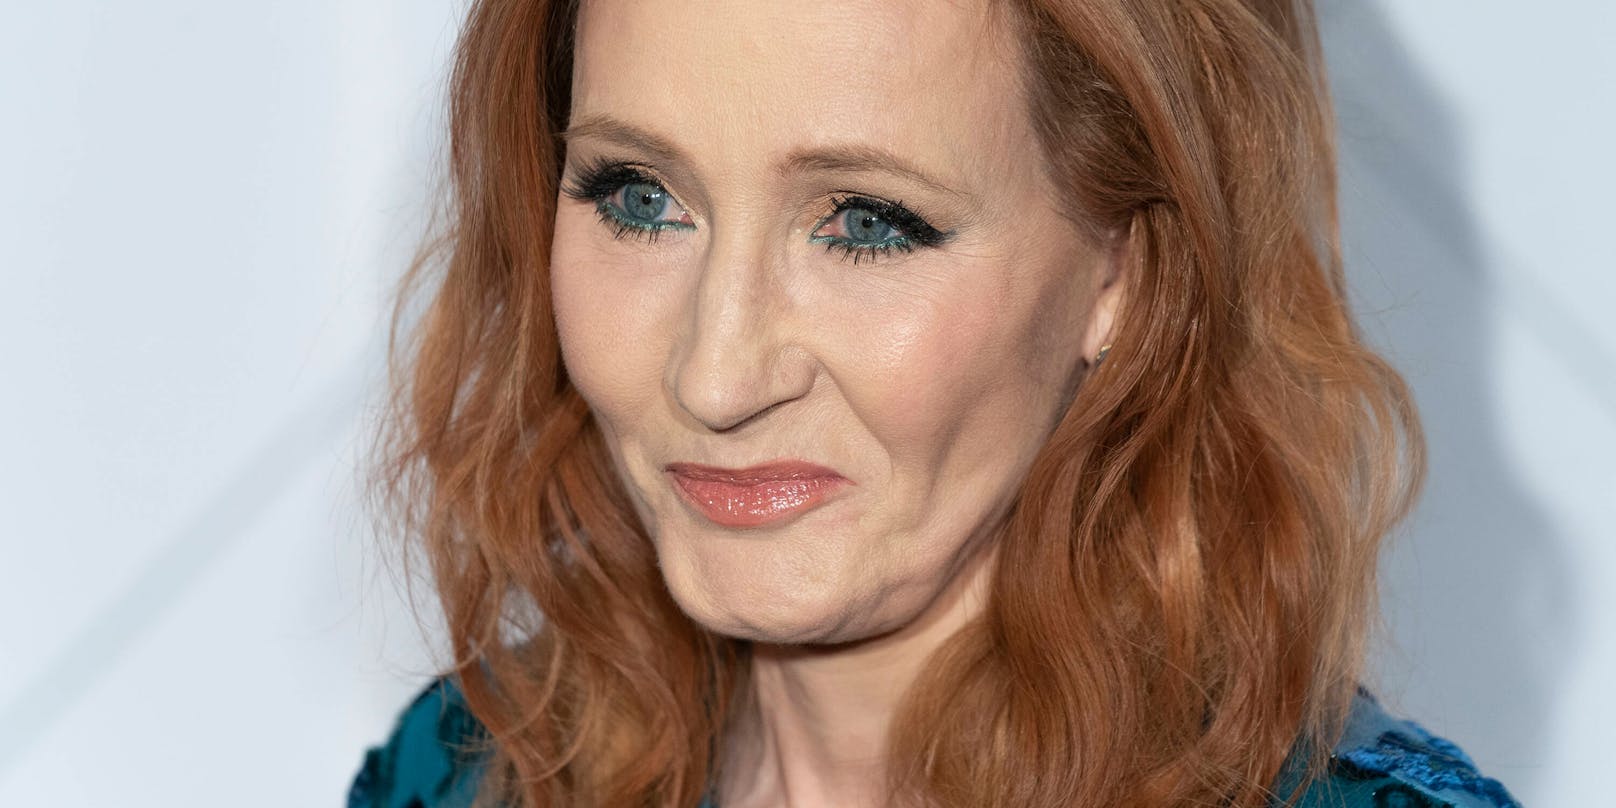 J.K. Rowling hetzt in neuem Buch gegen Trans-Menschen